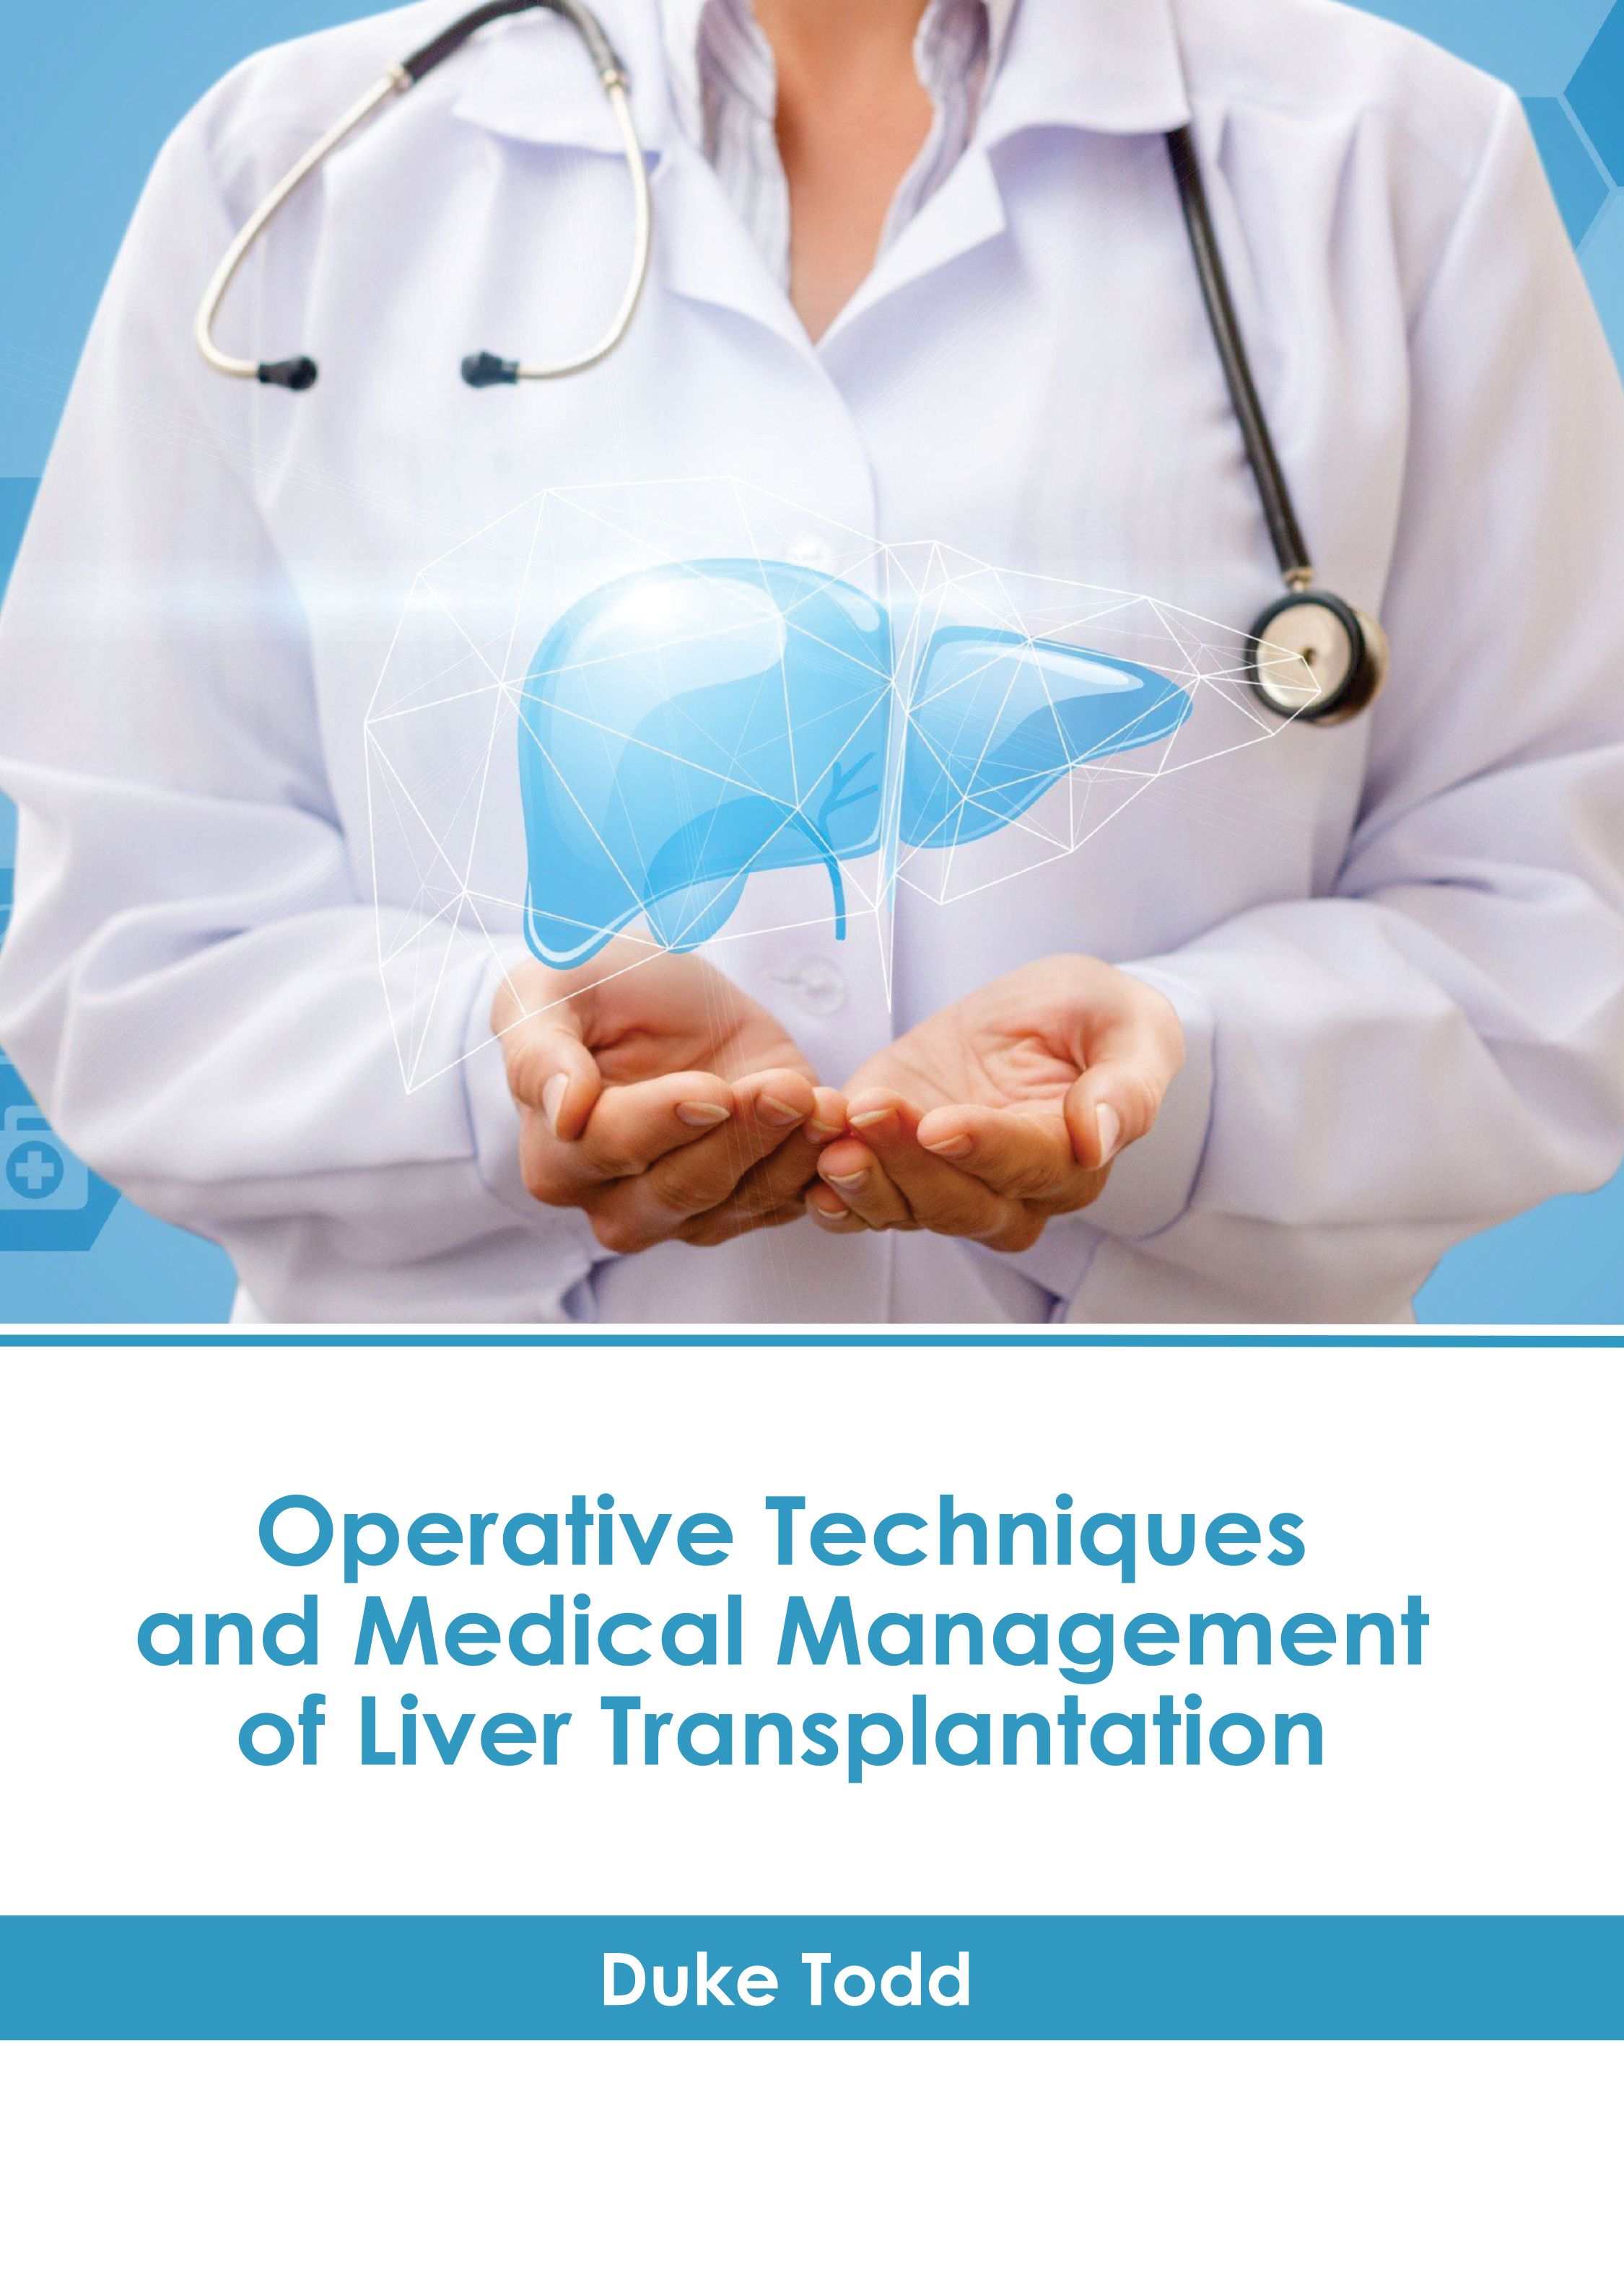 OPERATIVE TECHNIQUES AND MEDICAL MANAGEMENT OF LIVER TRANSPLANTATION